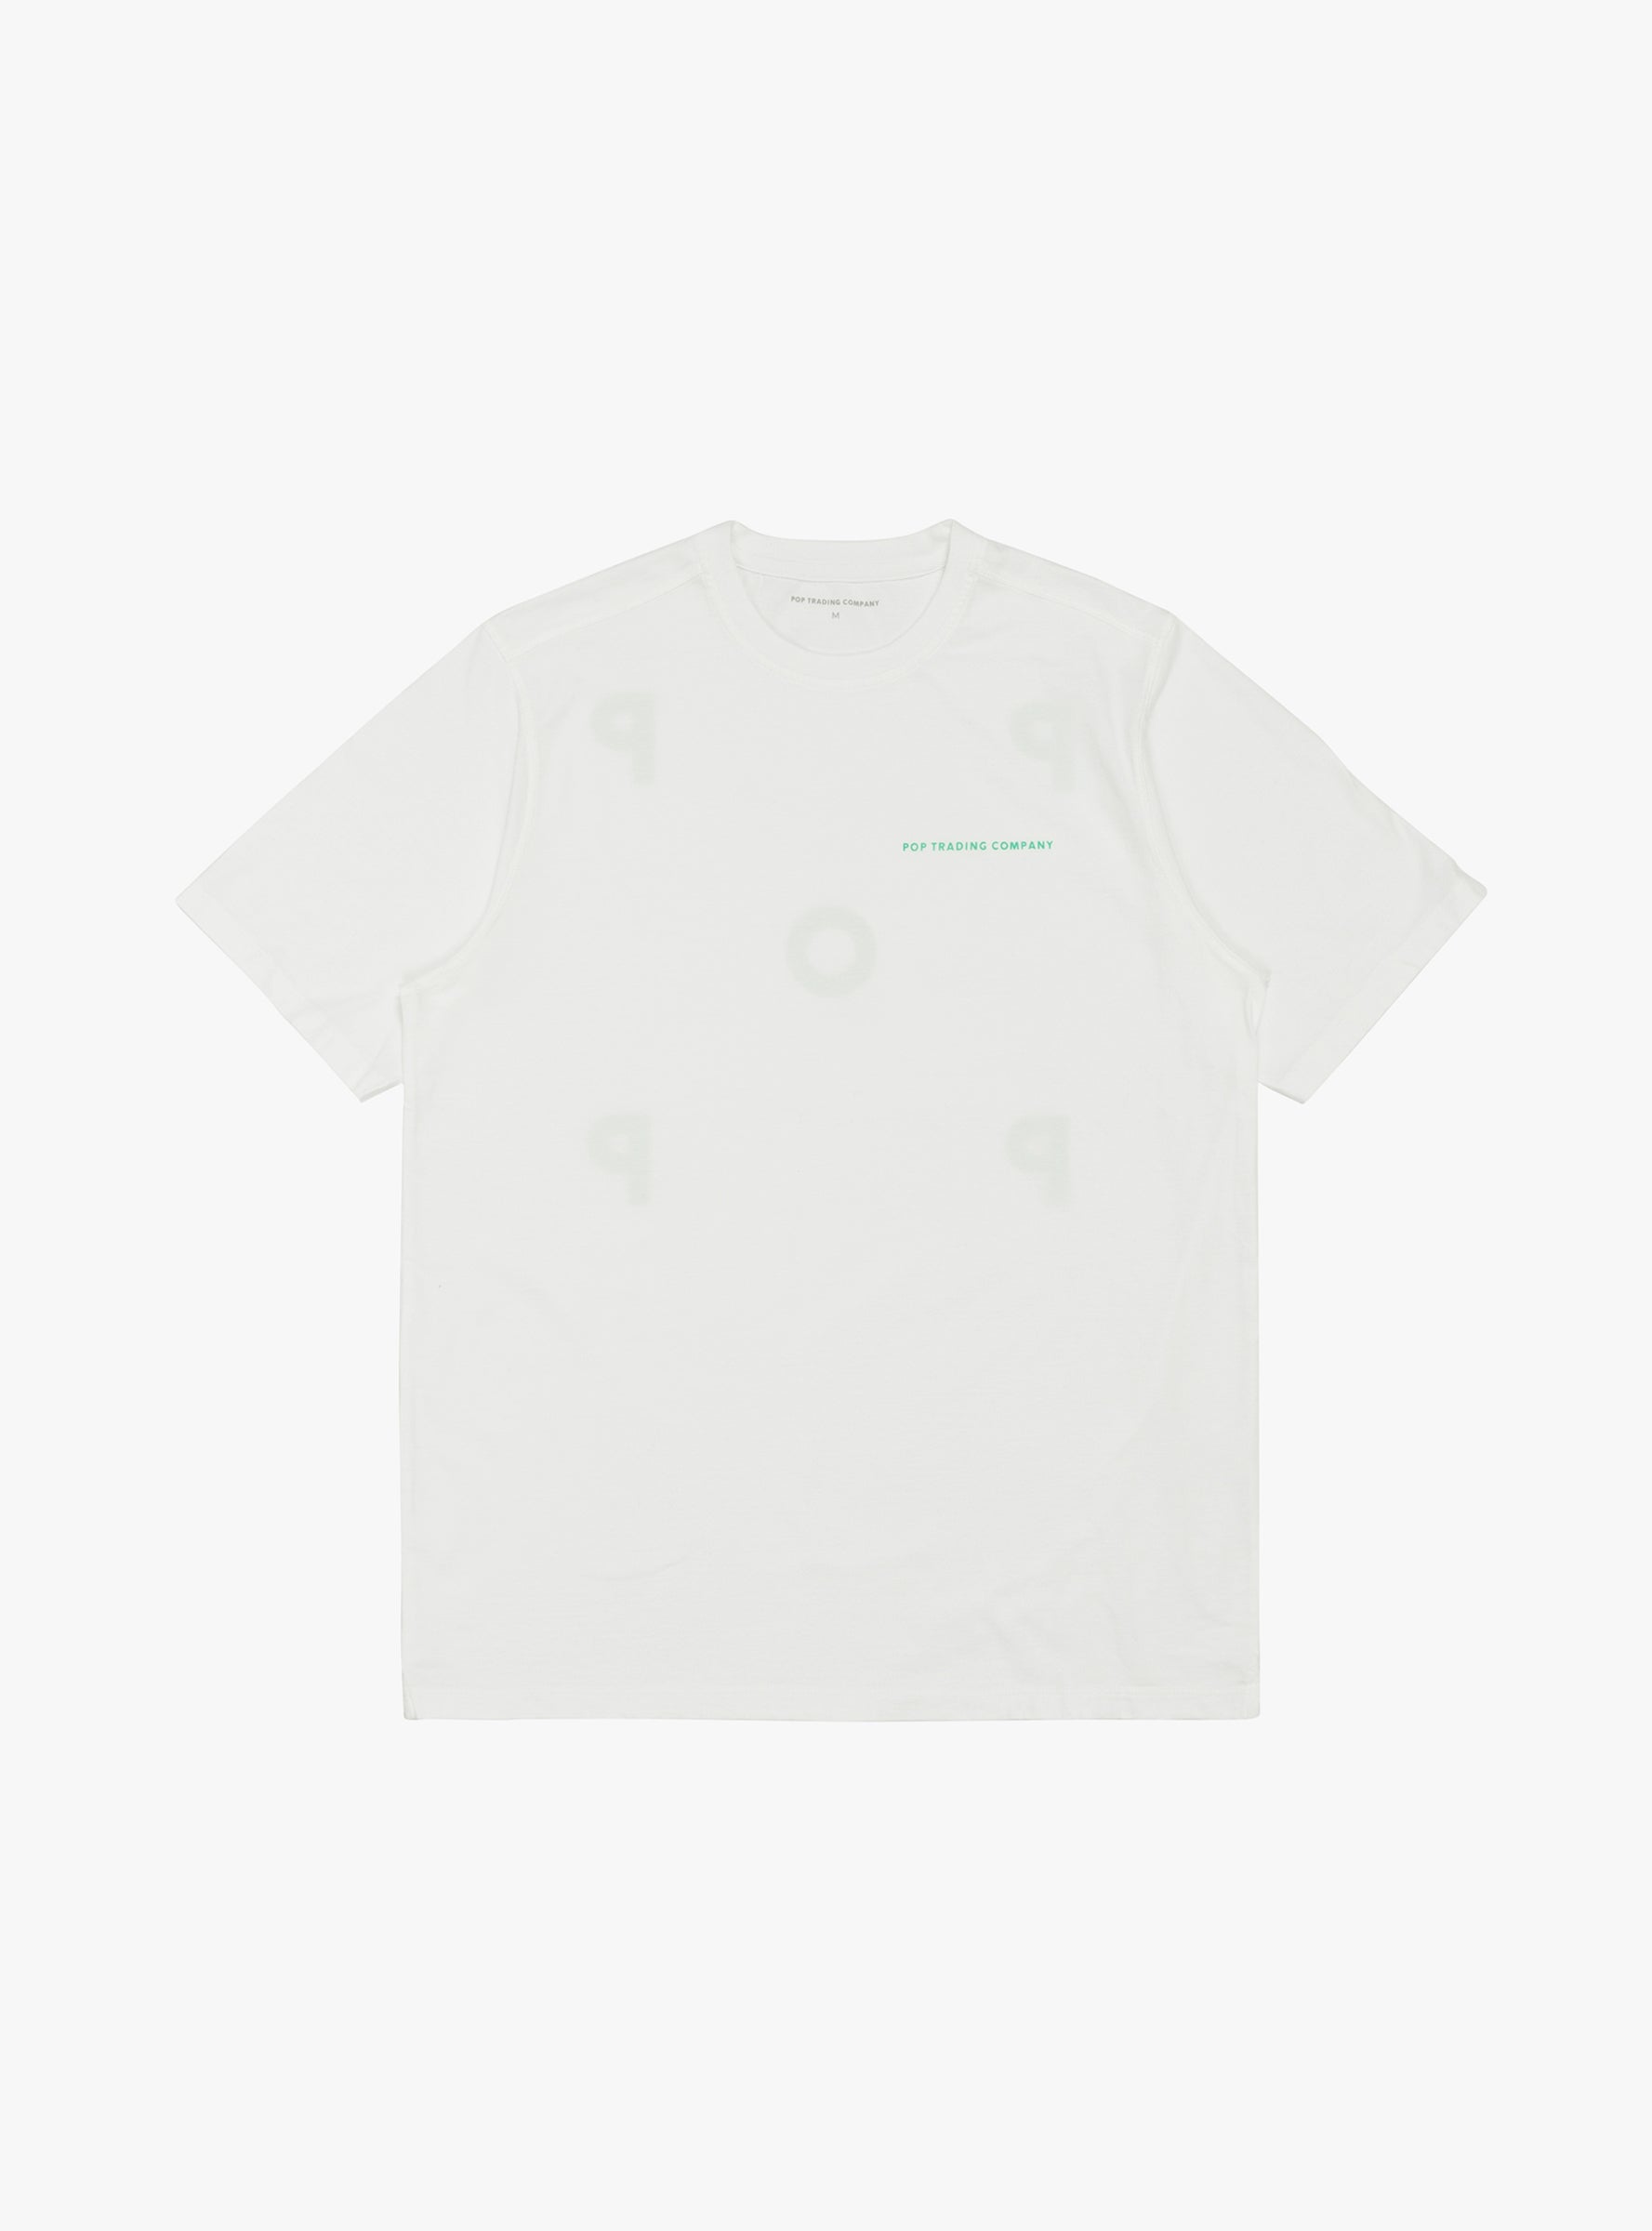 Pop Trading Company Pop Trading Company Logo T-shirt White & Green - Size: Large